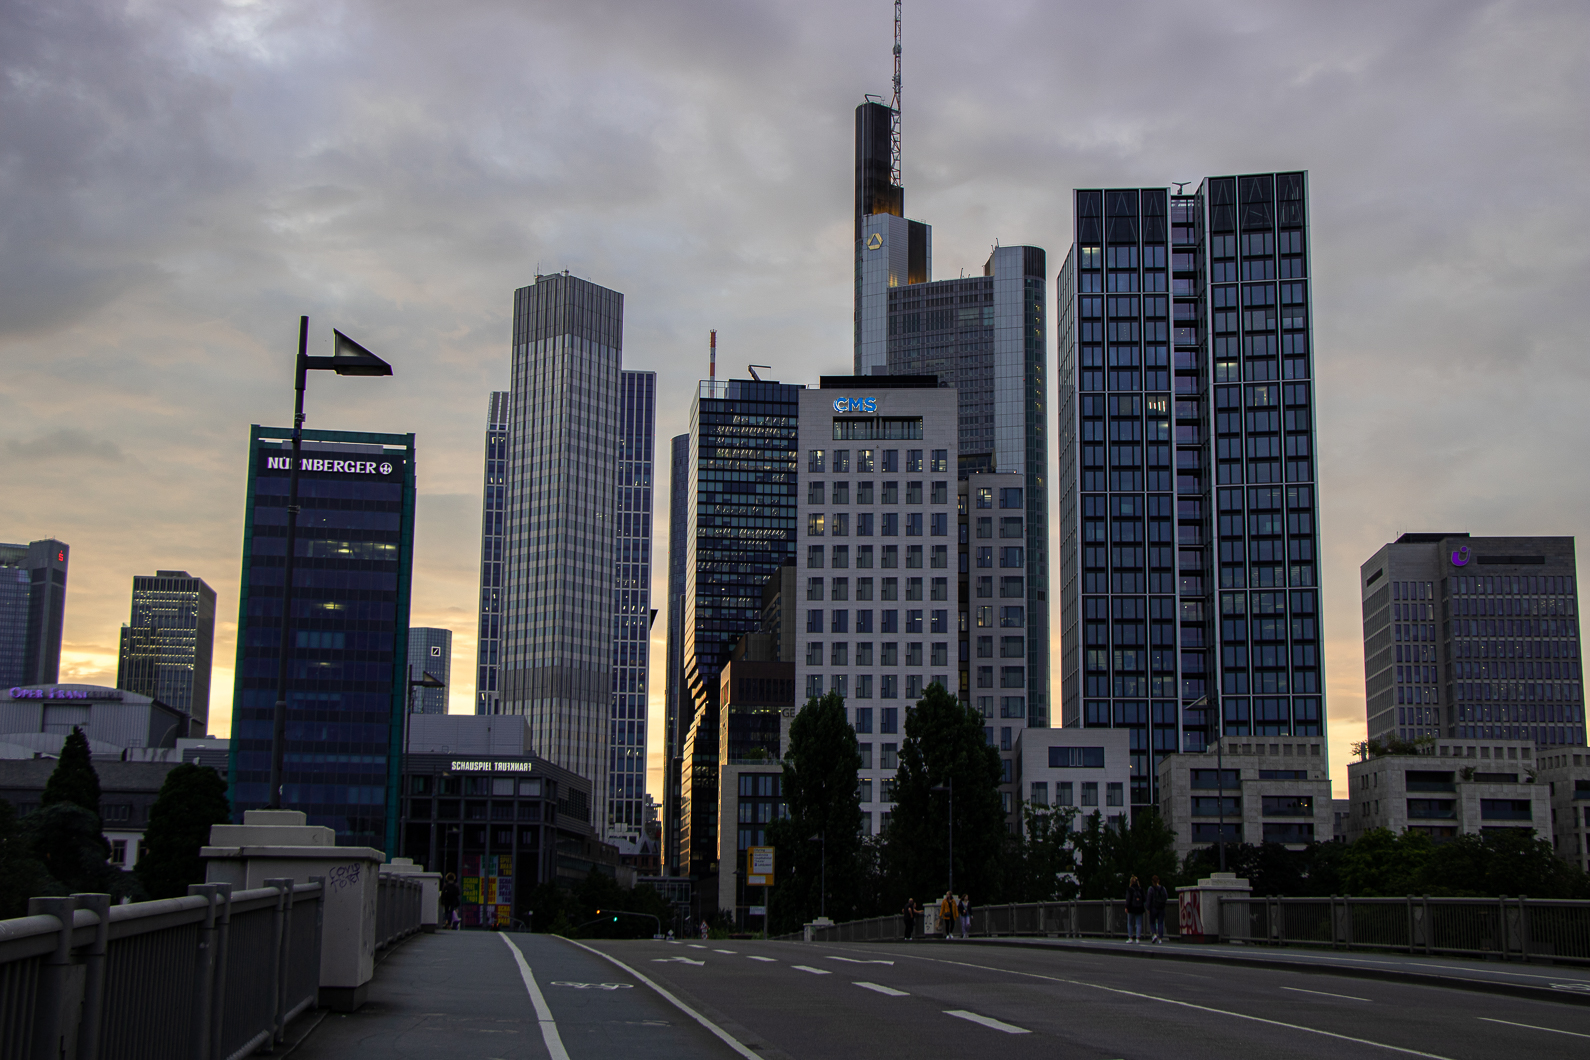 Frankfurt/Main